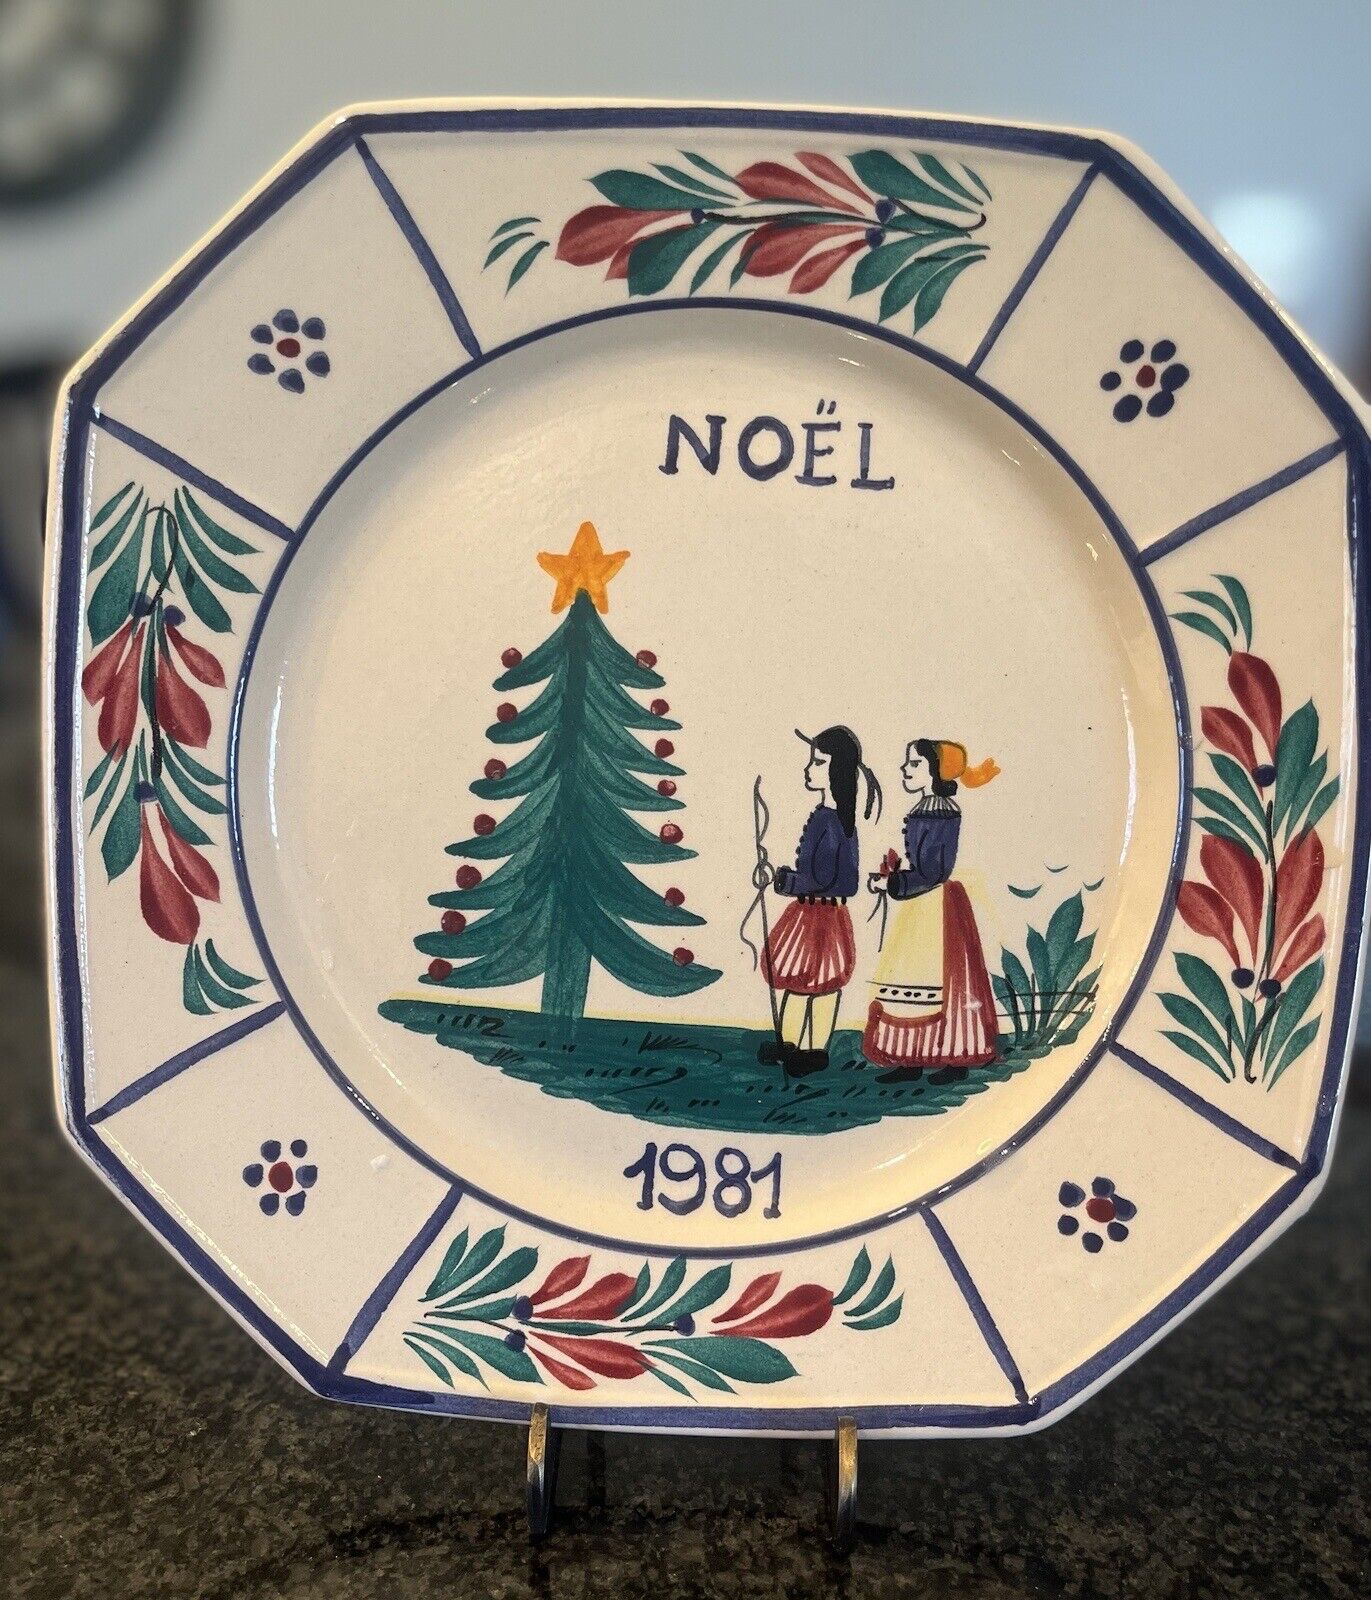 VTG HB Quimper 1981 Christmas Plate Noel Hand Painted, Signed & #\'d  2682/9500